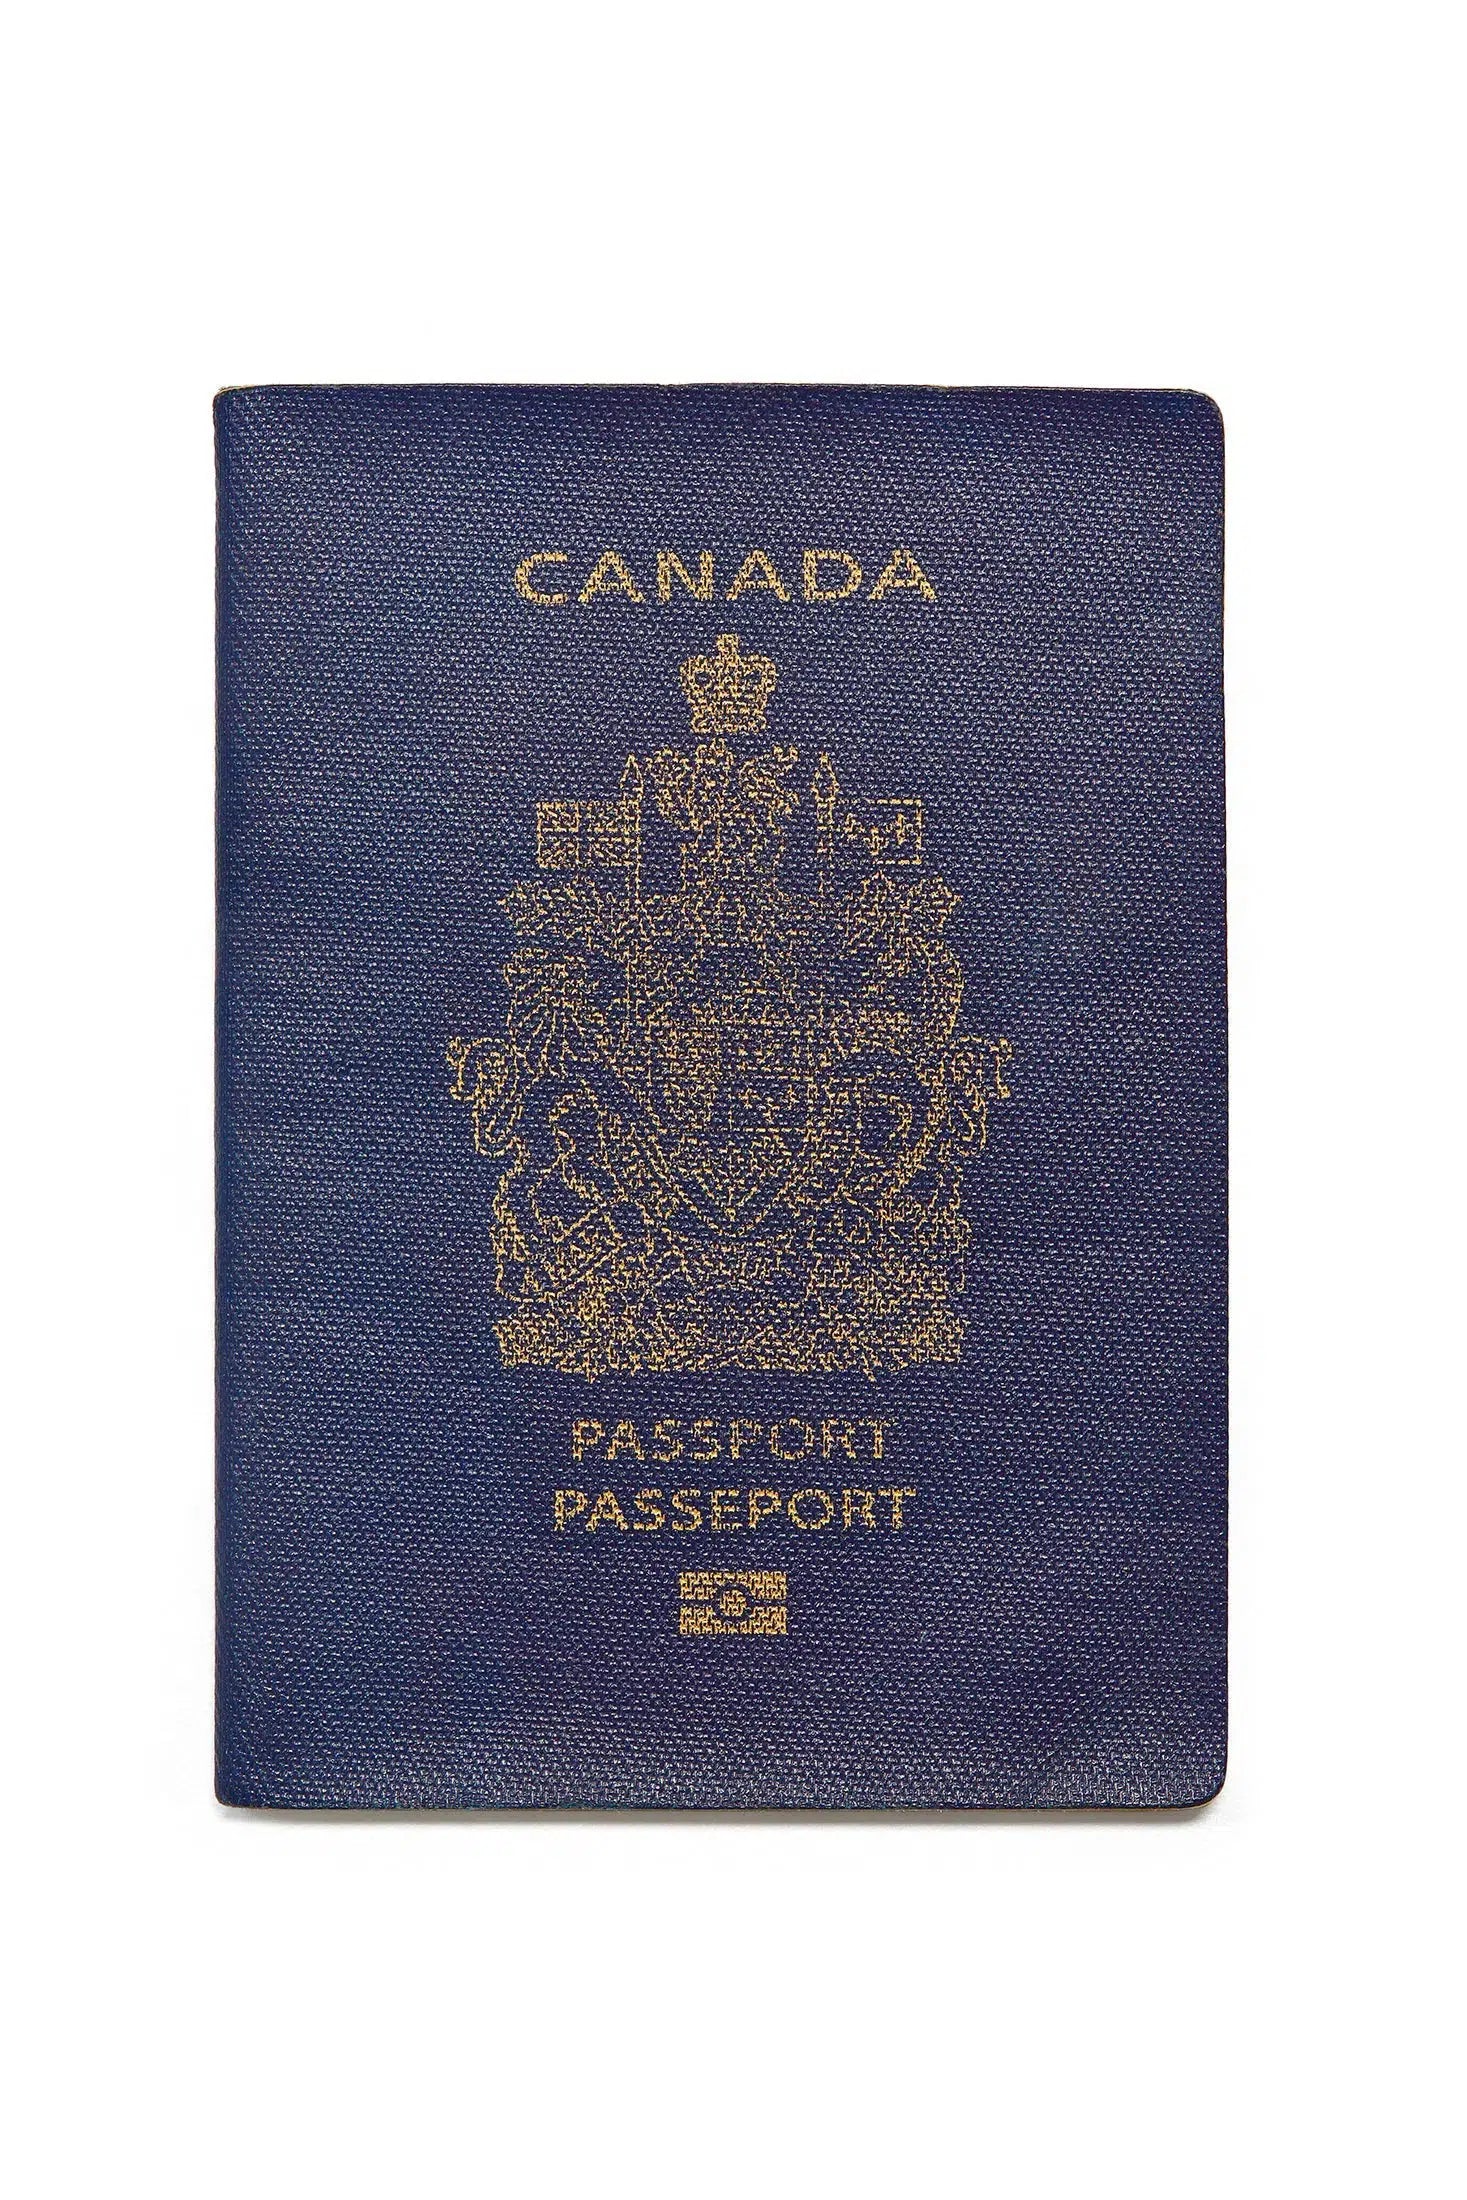 Canada Passport, by Peter Andrew-PurePhoto